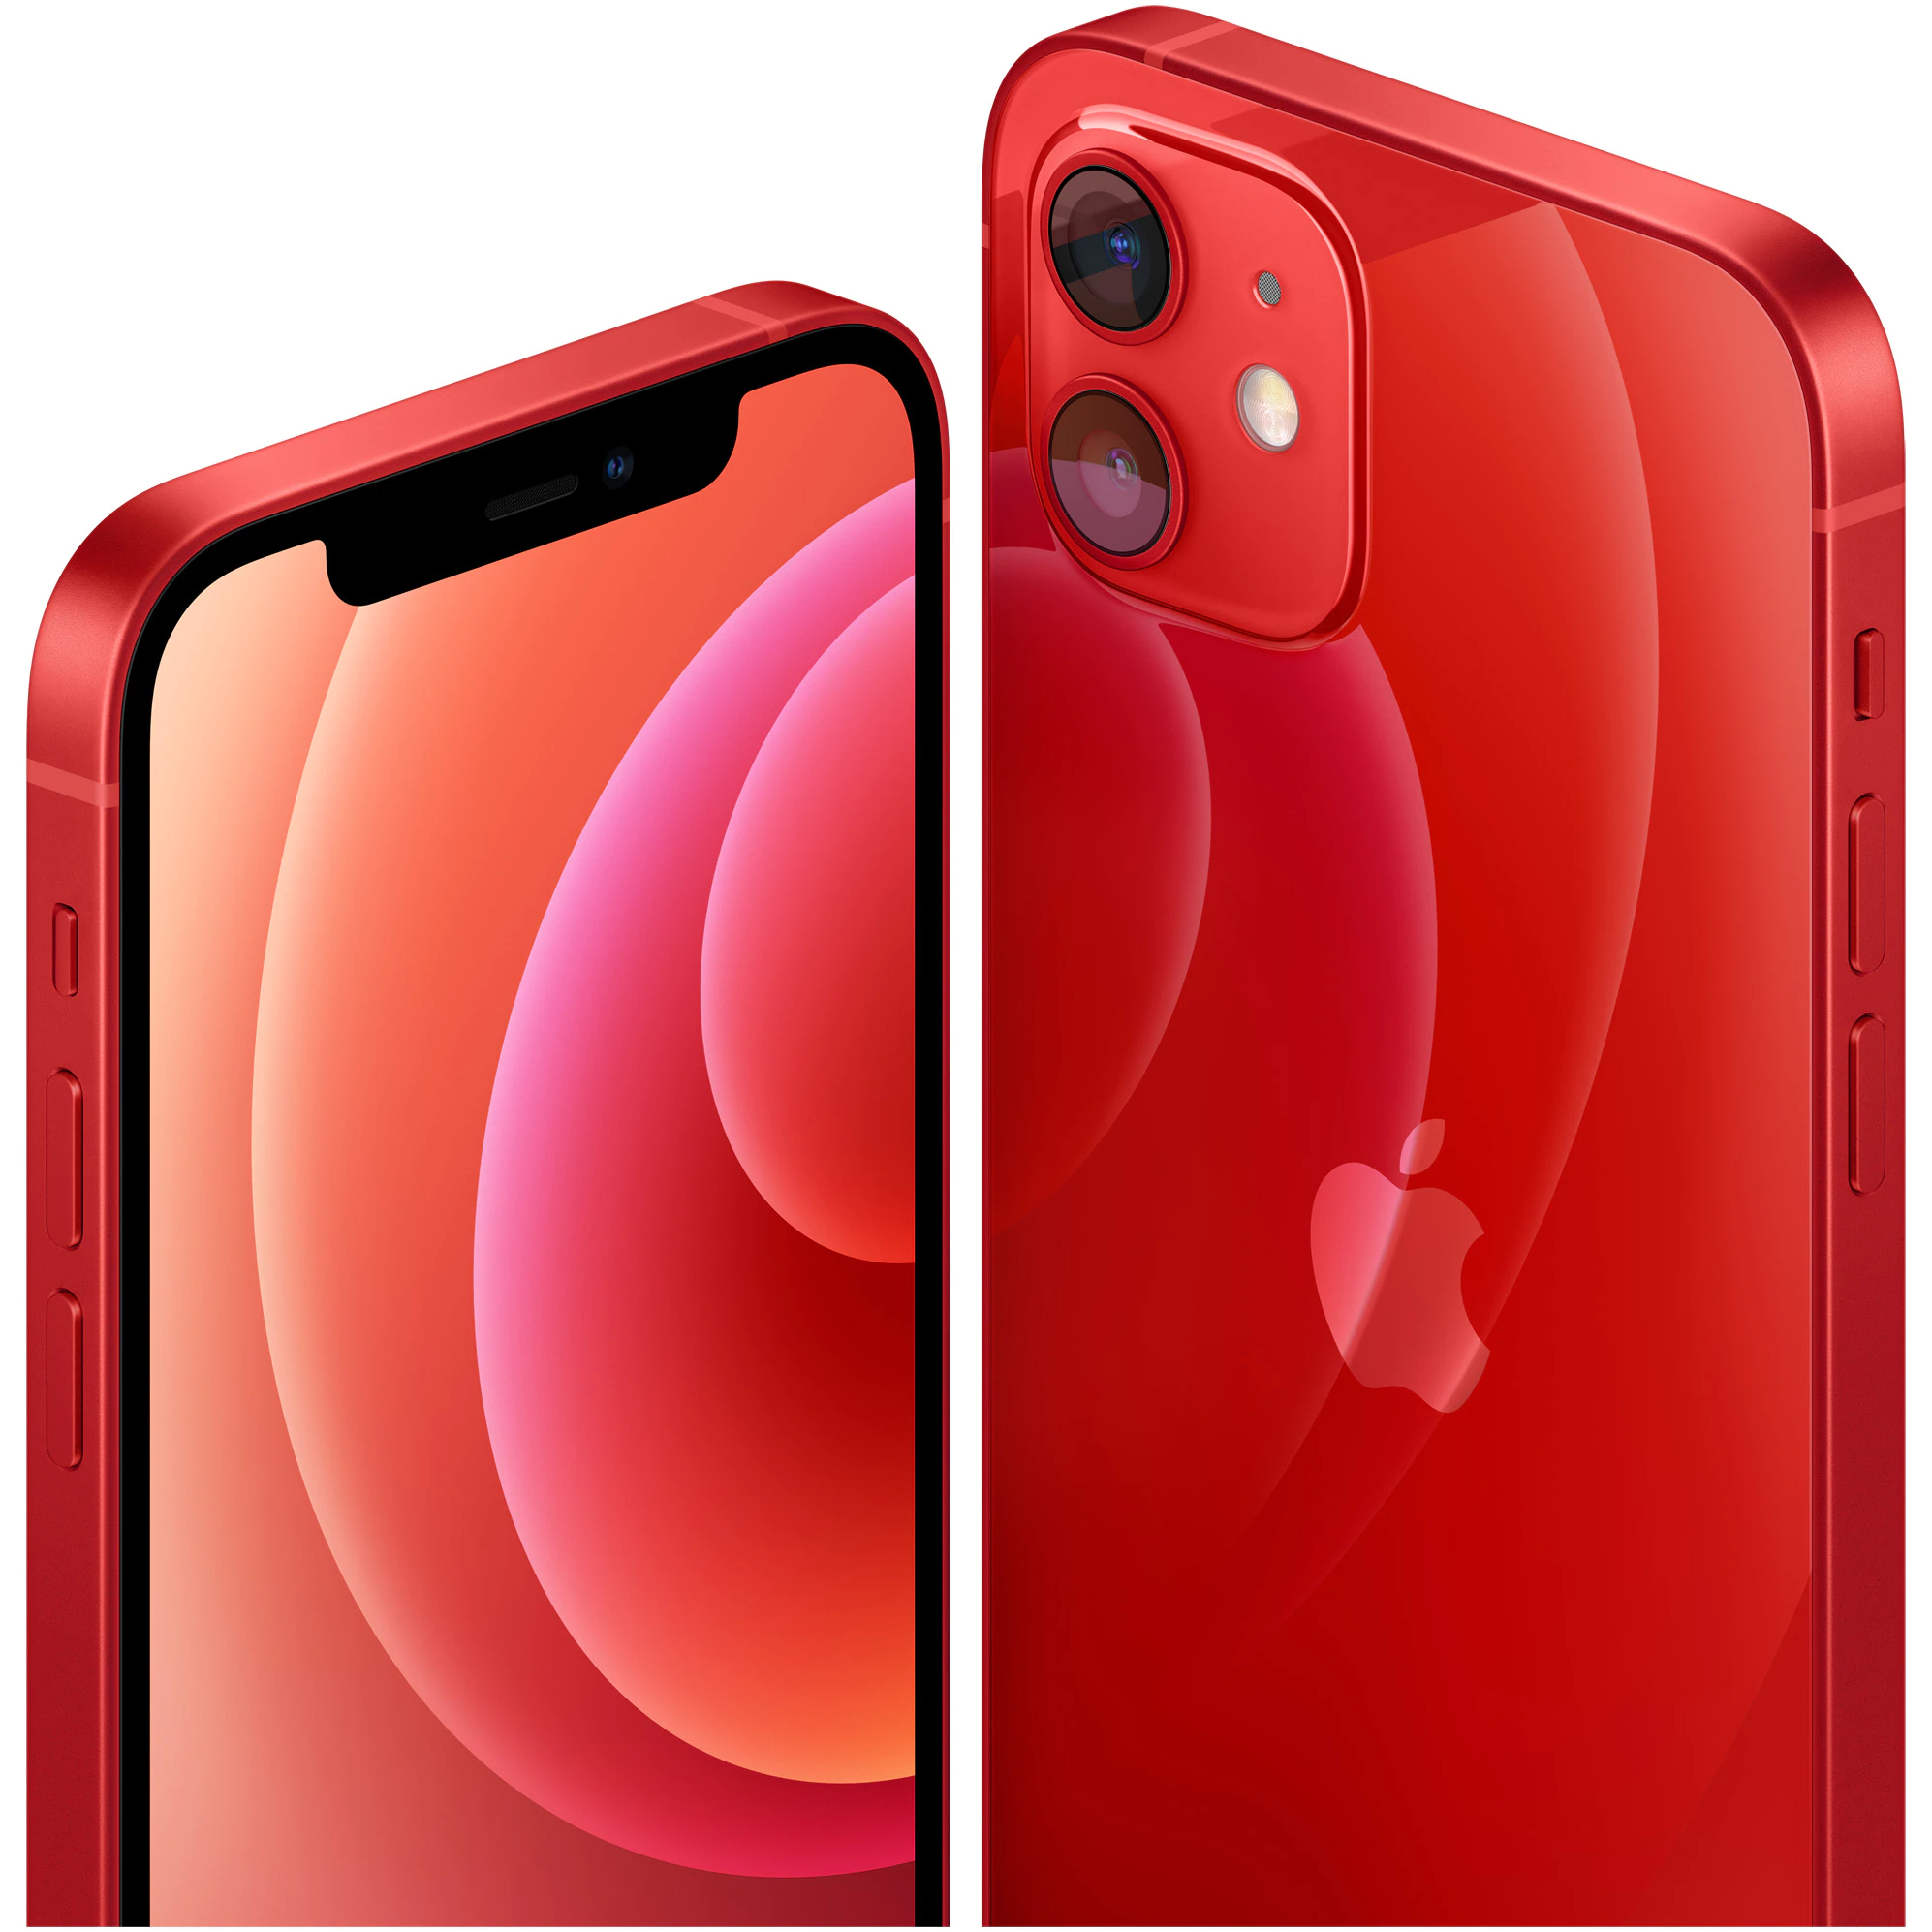 Telefon mobil Apple iPhone 12 Red, Rosu, 64GB, Dual eSim, Super retina XDR [1]